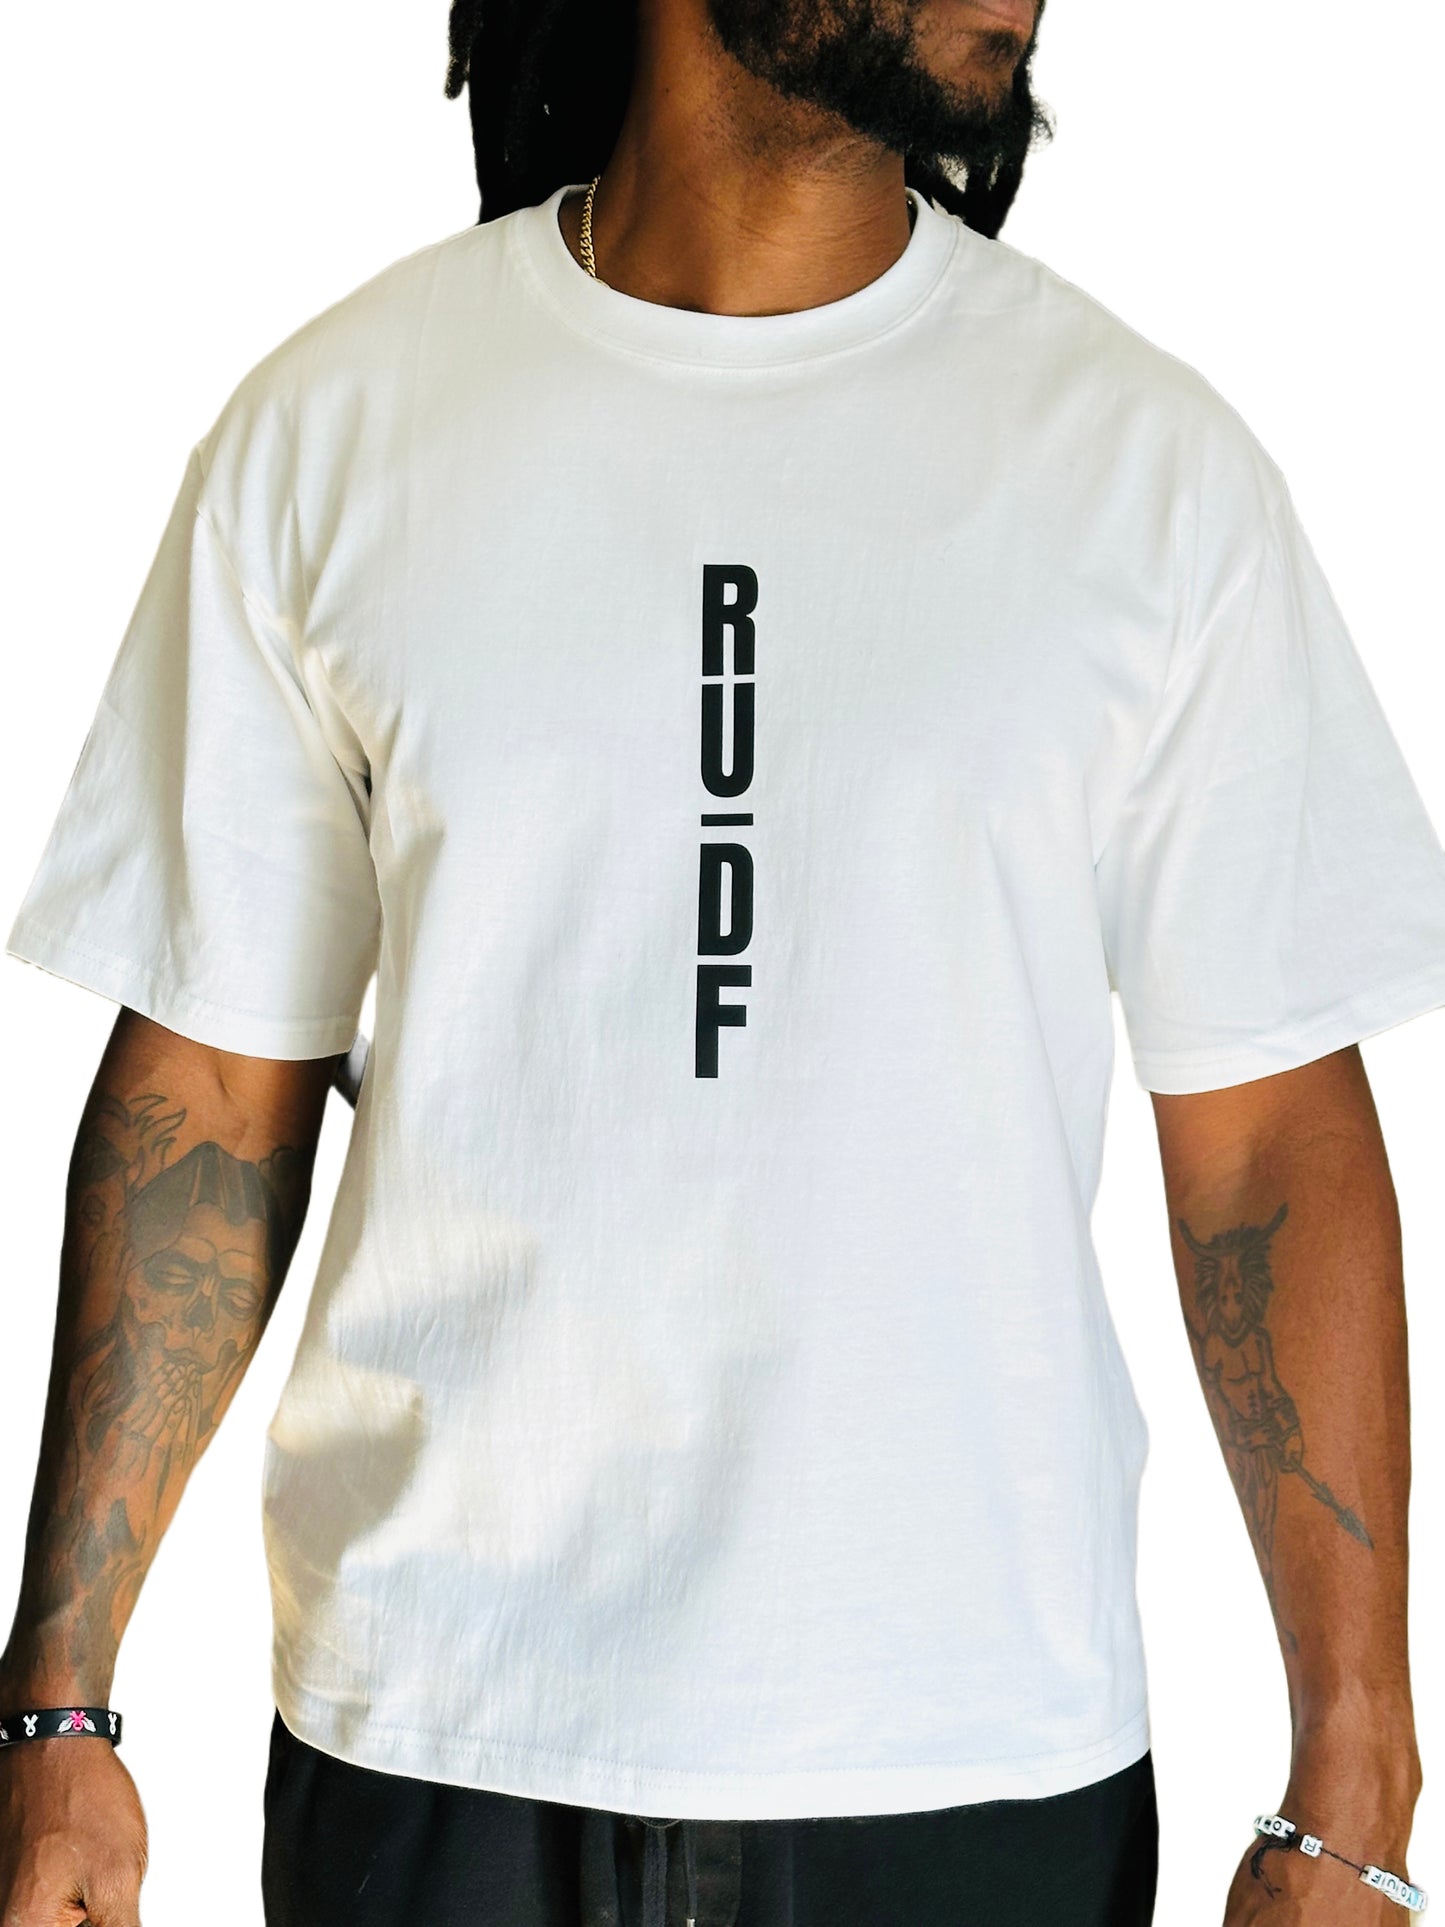 R.U.D.F T-Shirt